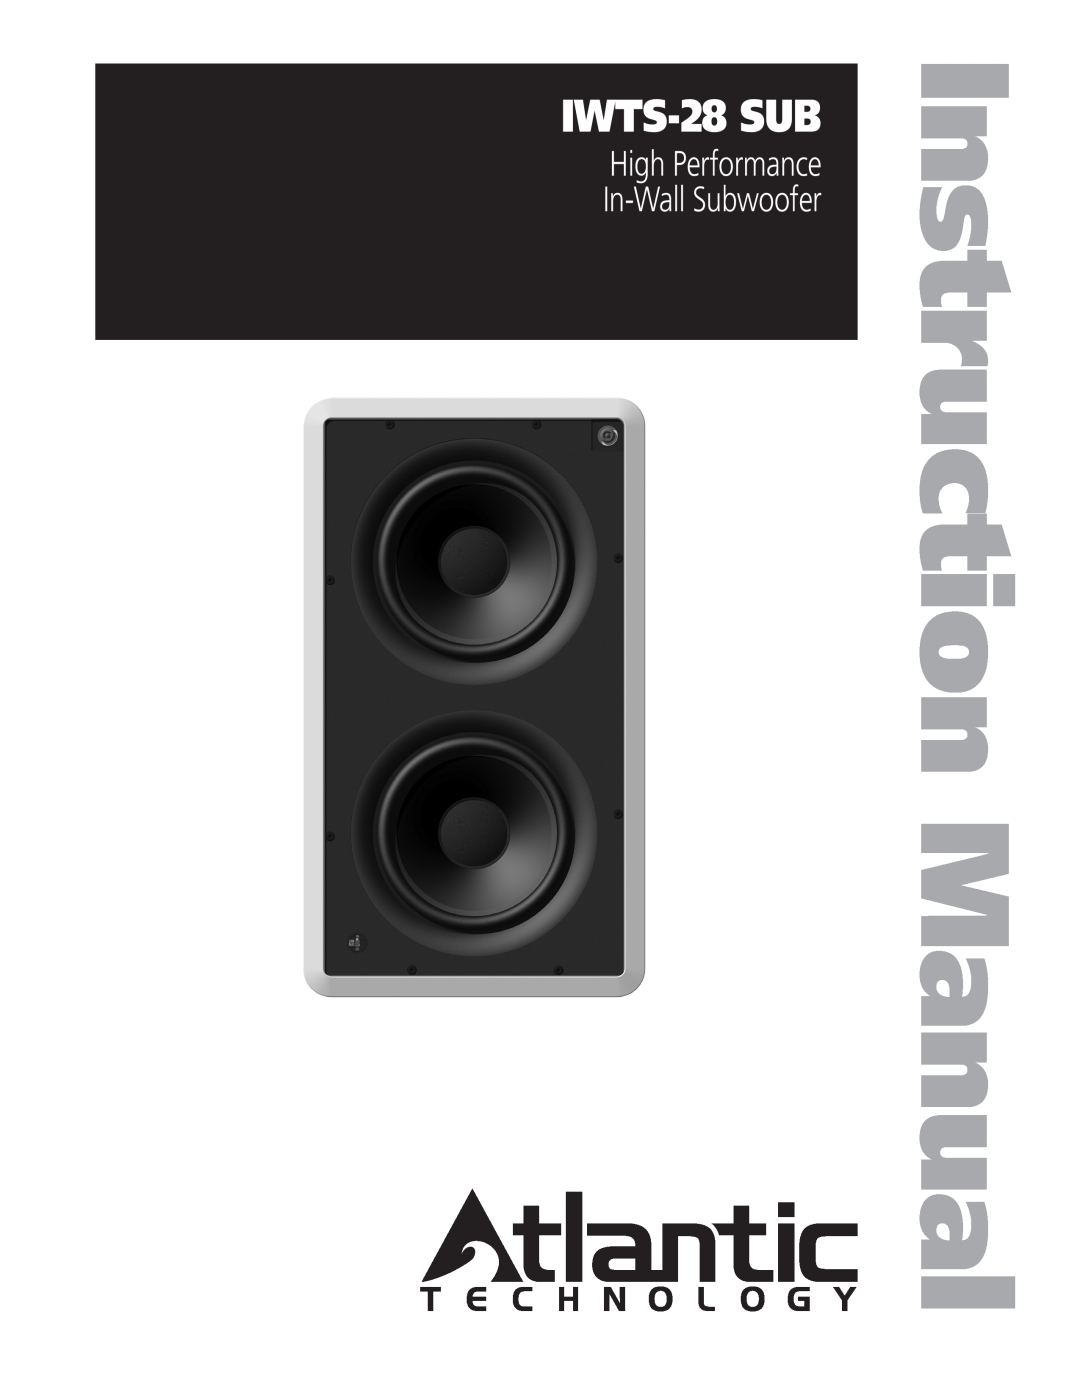 Atlantic Technology IWTS-28 SUB instruction manual IWTS-28SUB, High Performance In-WallSubwoofer 